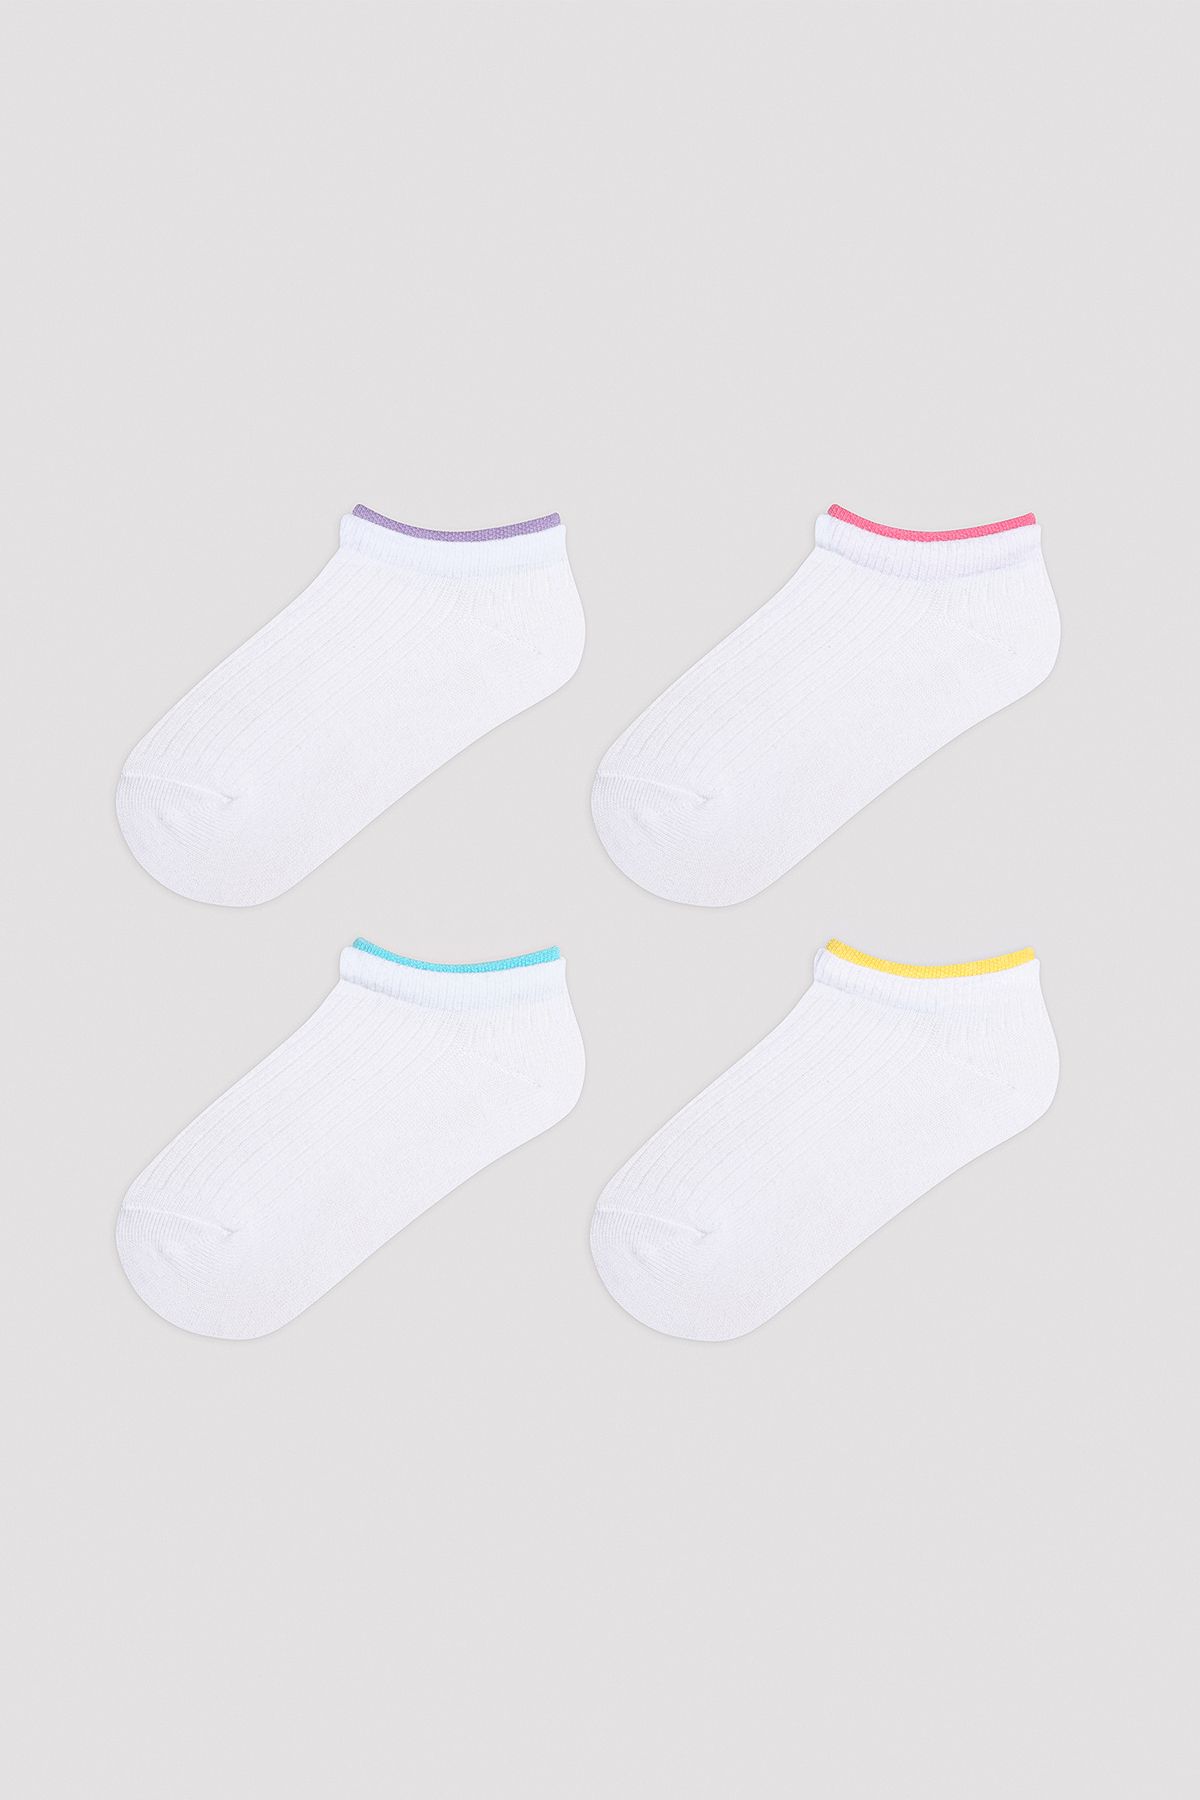 Penti Kız Çocuk Thin Lines Beyaz 4lü Patik Çorap